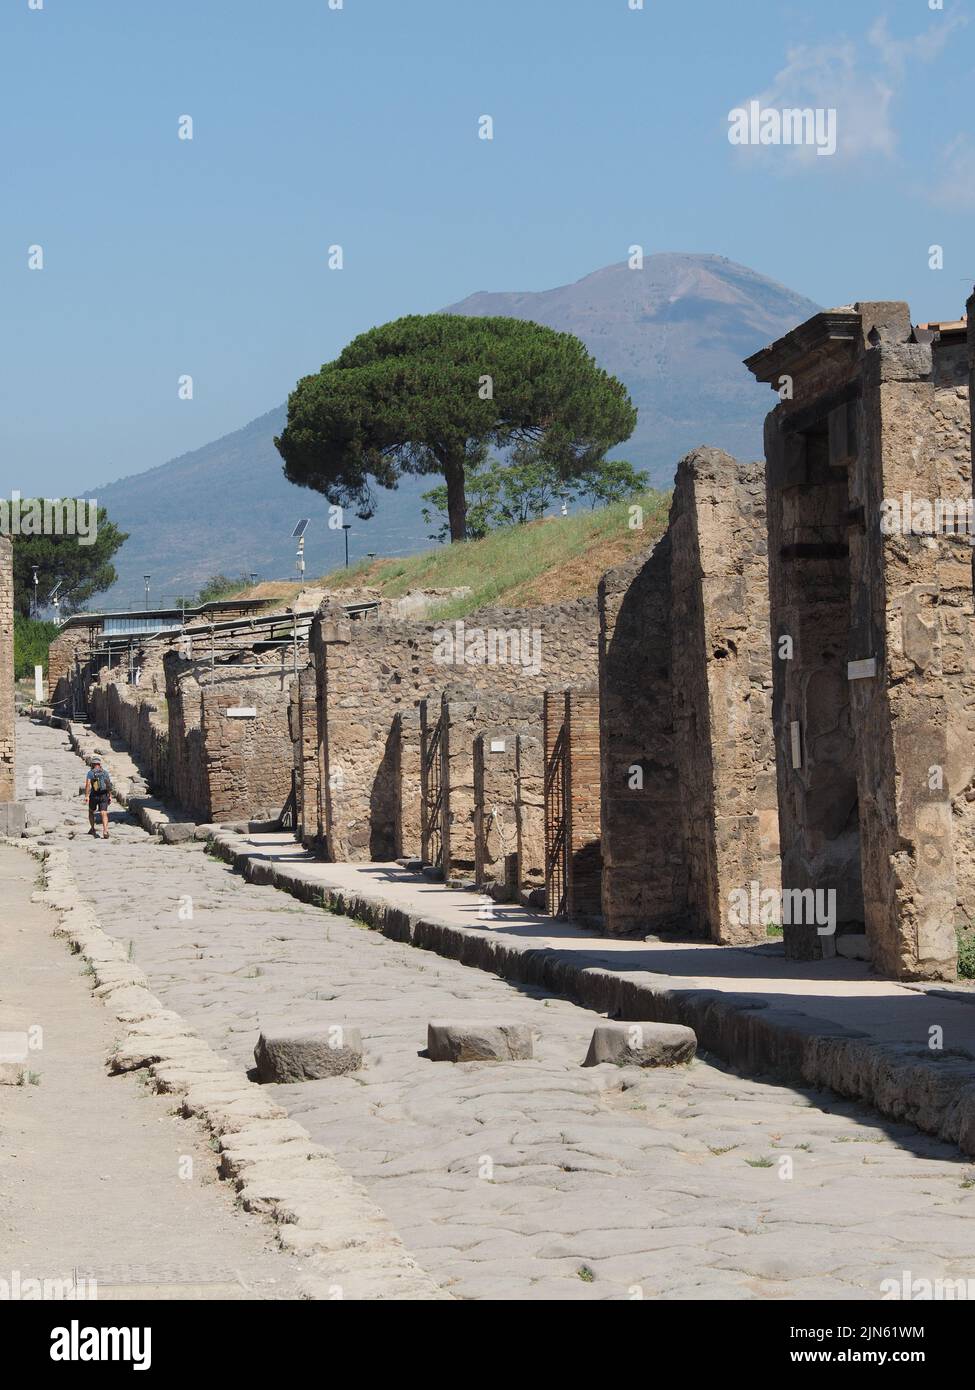 Tourist visiting the Pompeii excavation site with the Vesivius volcano in the background. Pompei, Campania, Italy Stock Photo